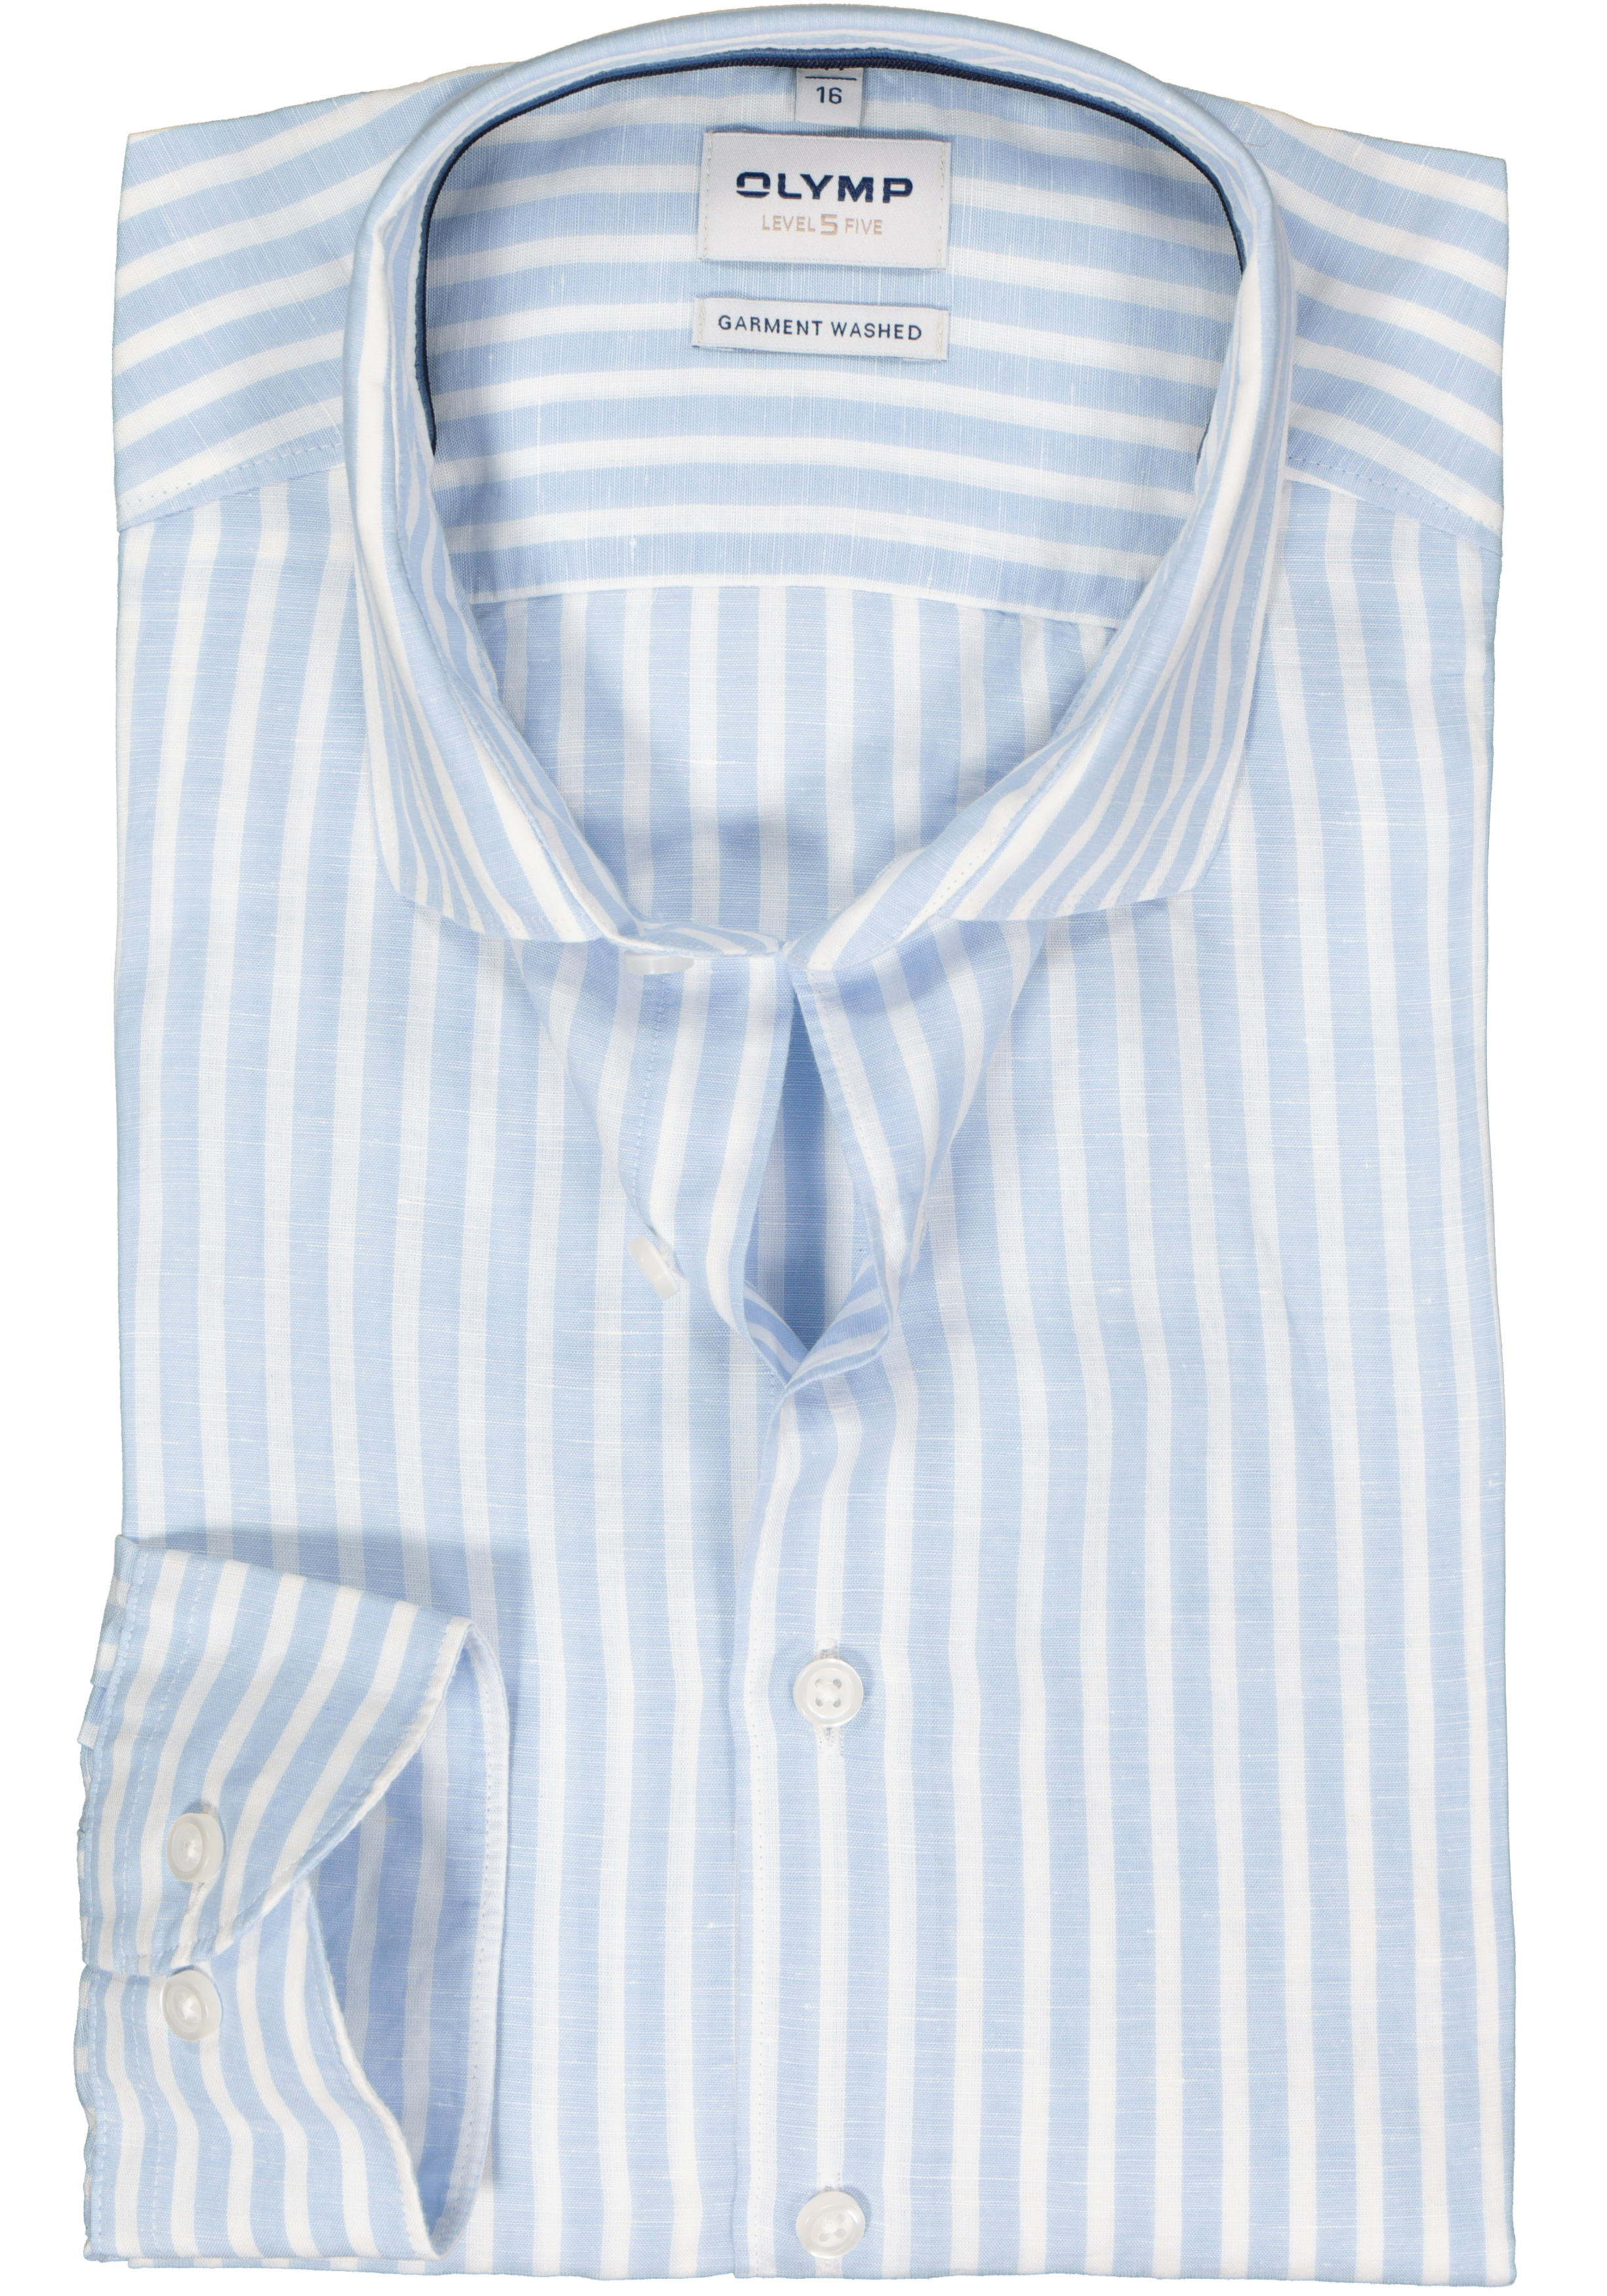 OLYMP Level 5 body fit overhemd, structuur, lichtblauw met wit gestreept